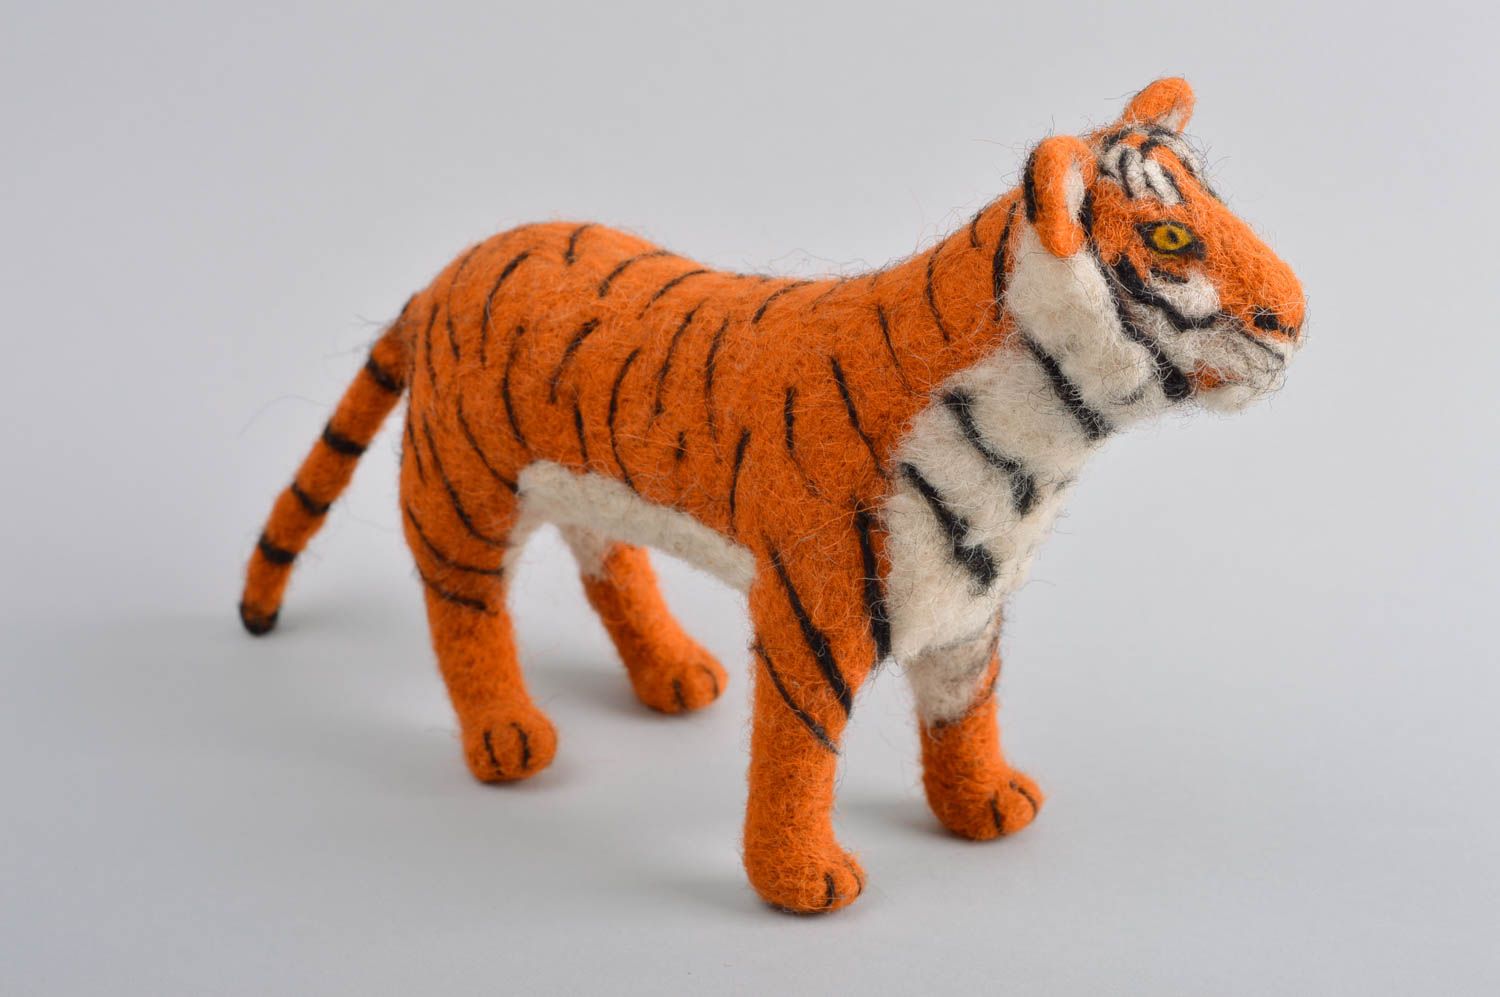 Handmade toy designer toy woolen animal toy for kids nursery decor gift ideas photo 2